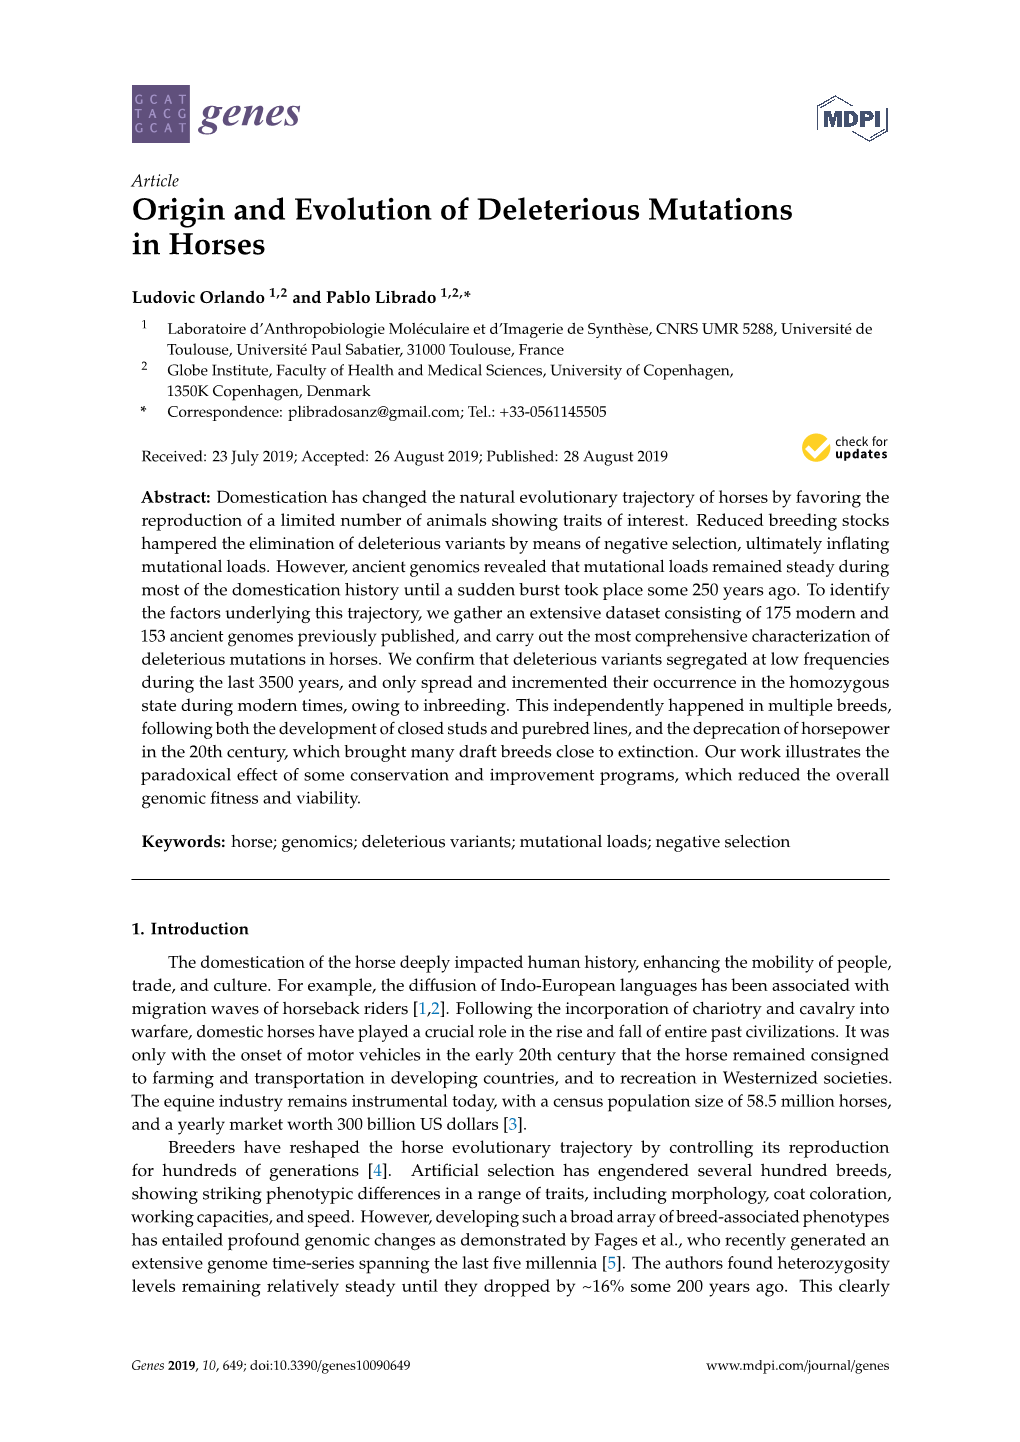 Origin and Evolution of Deleterious Mutations in Horses